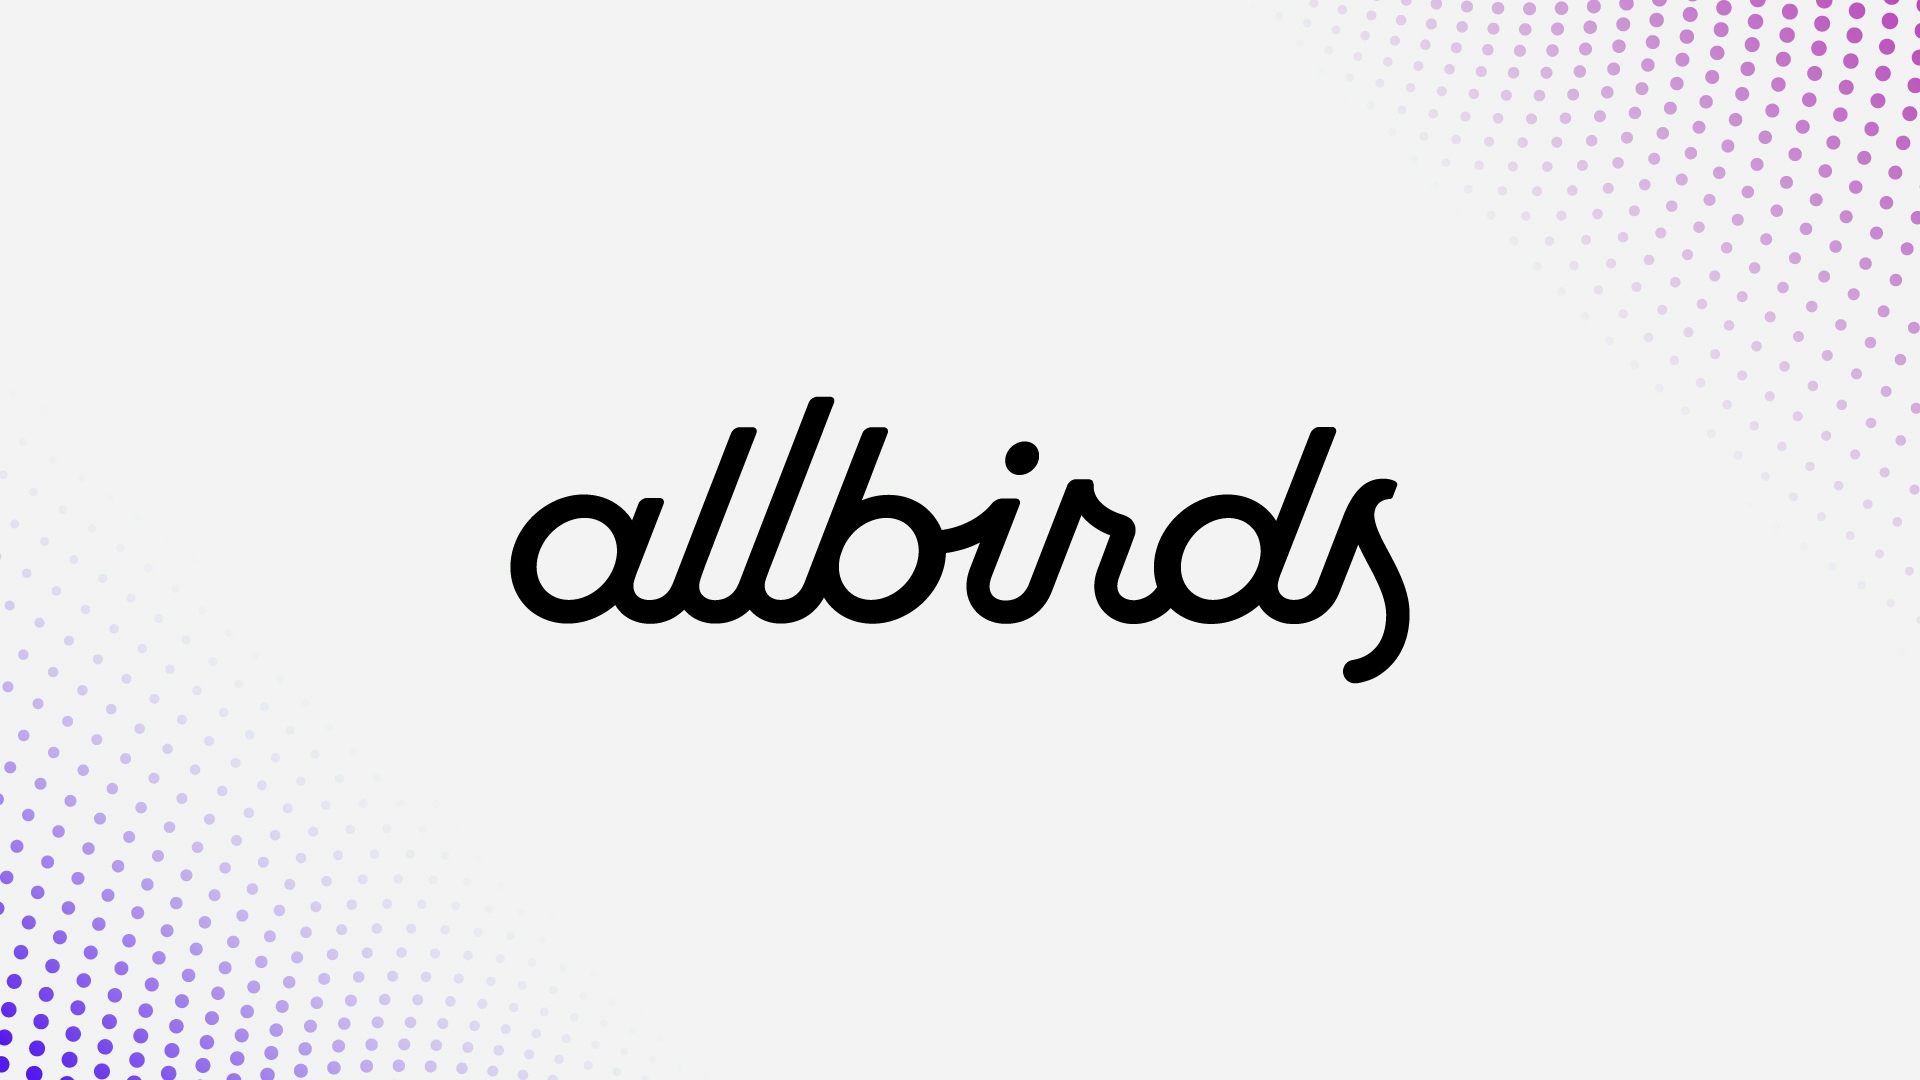 "allbirds" text